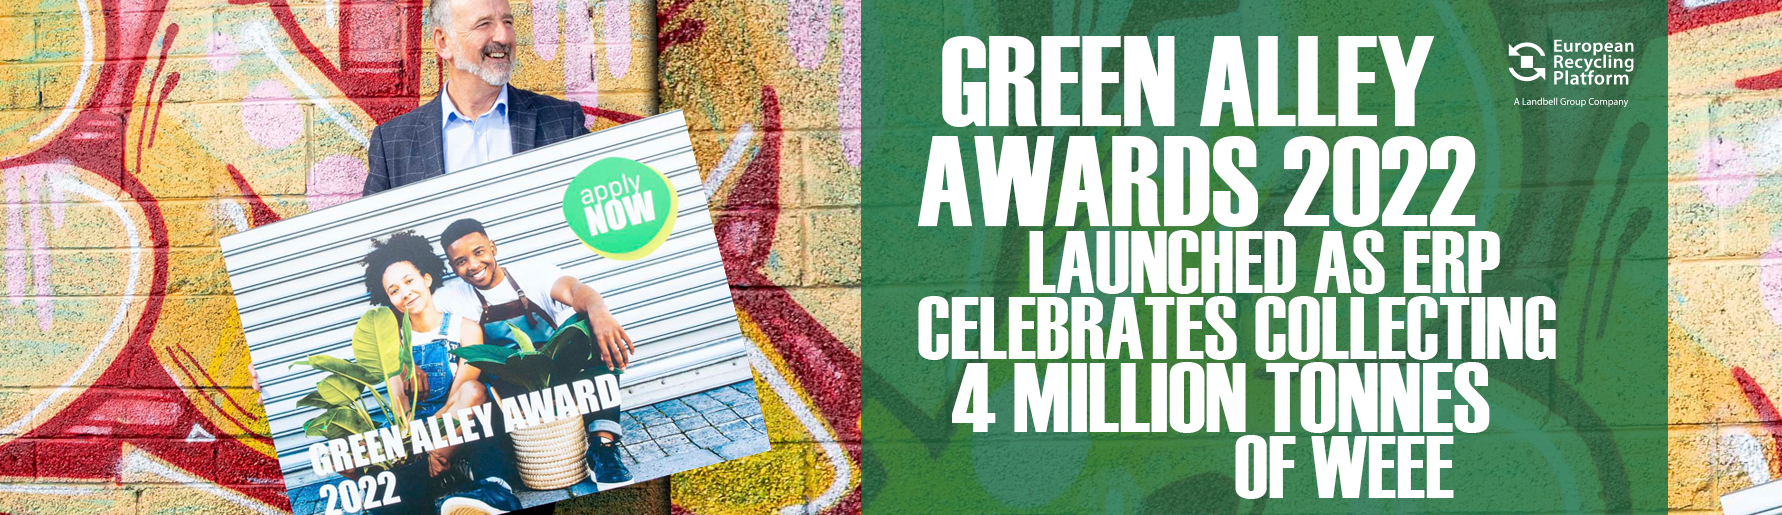 ERP-Banner-Green-Alley-Awards